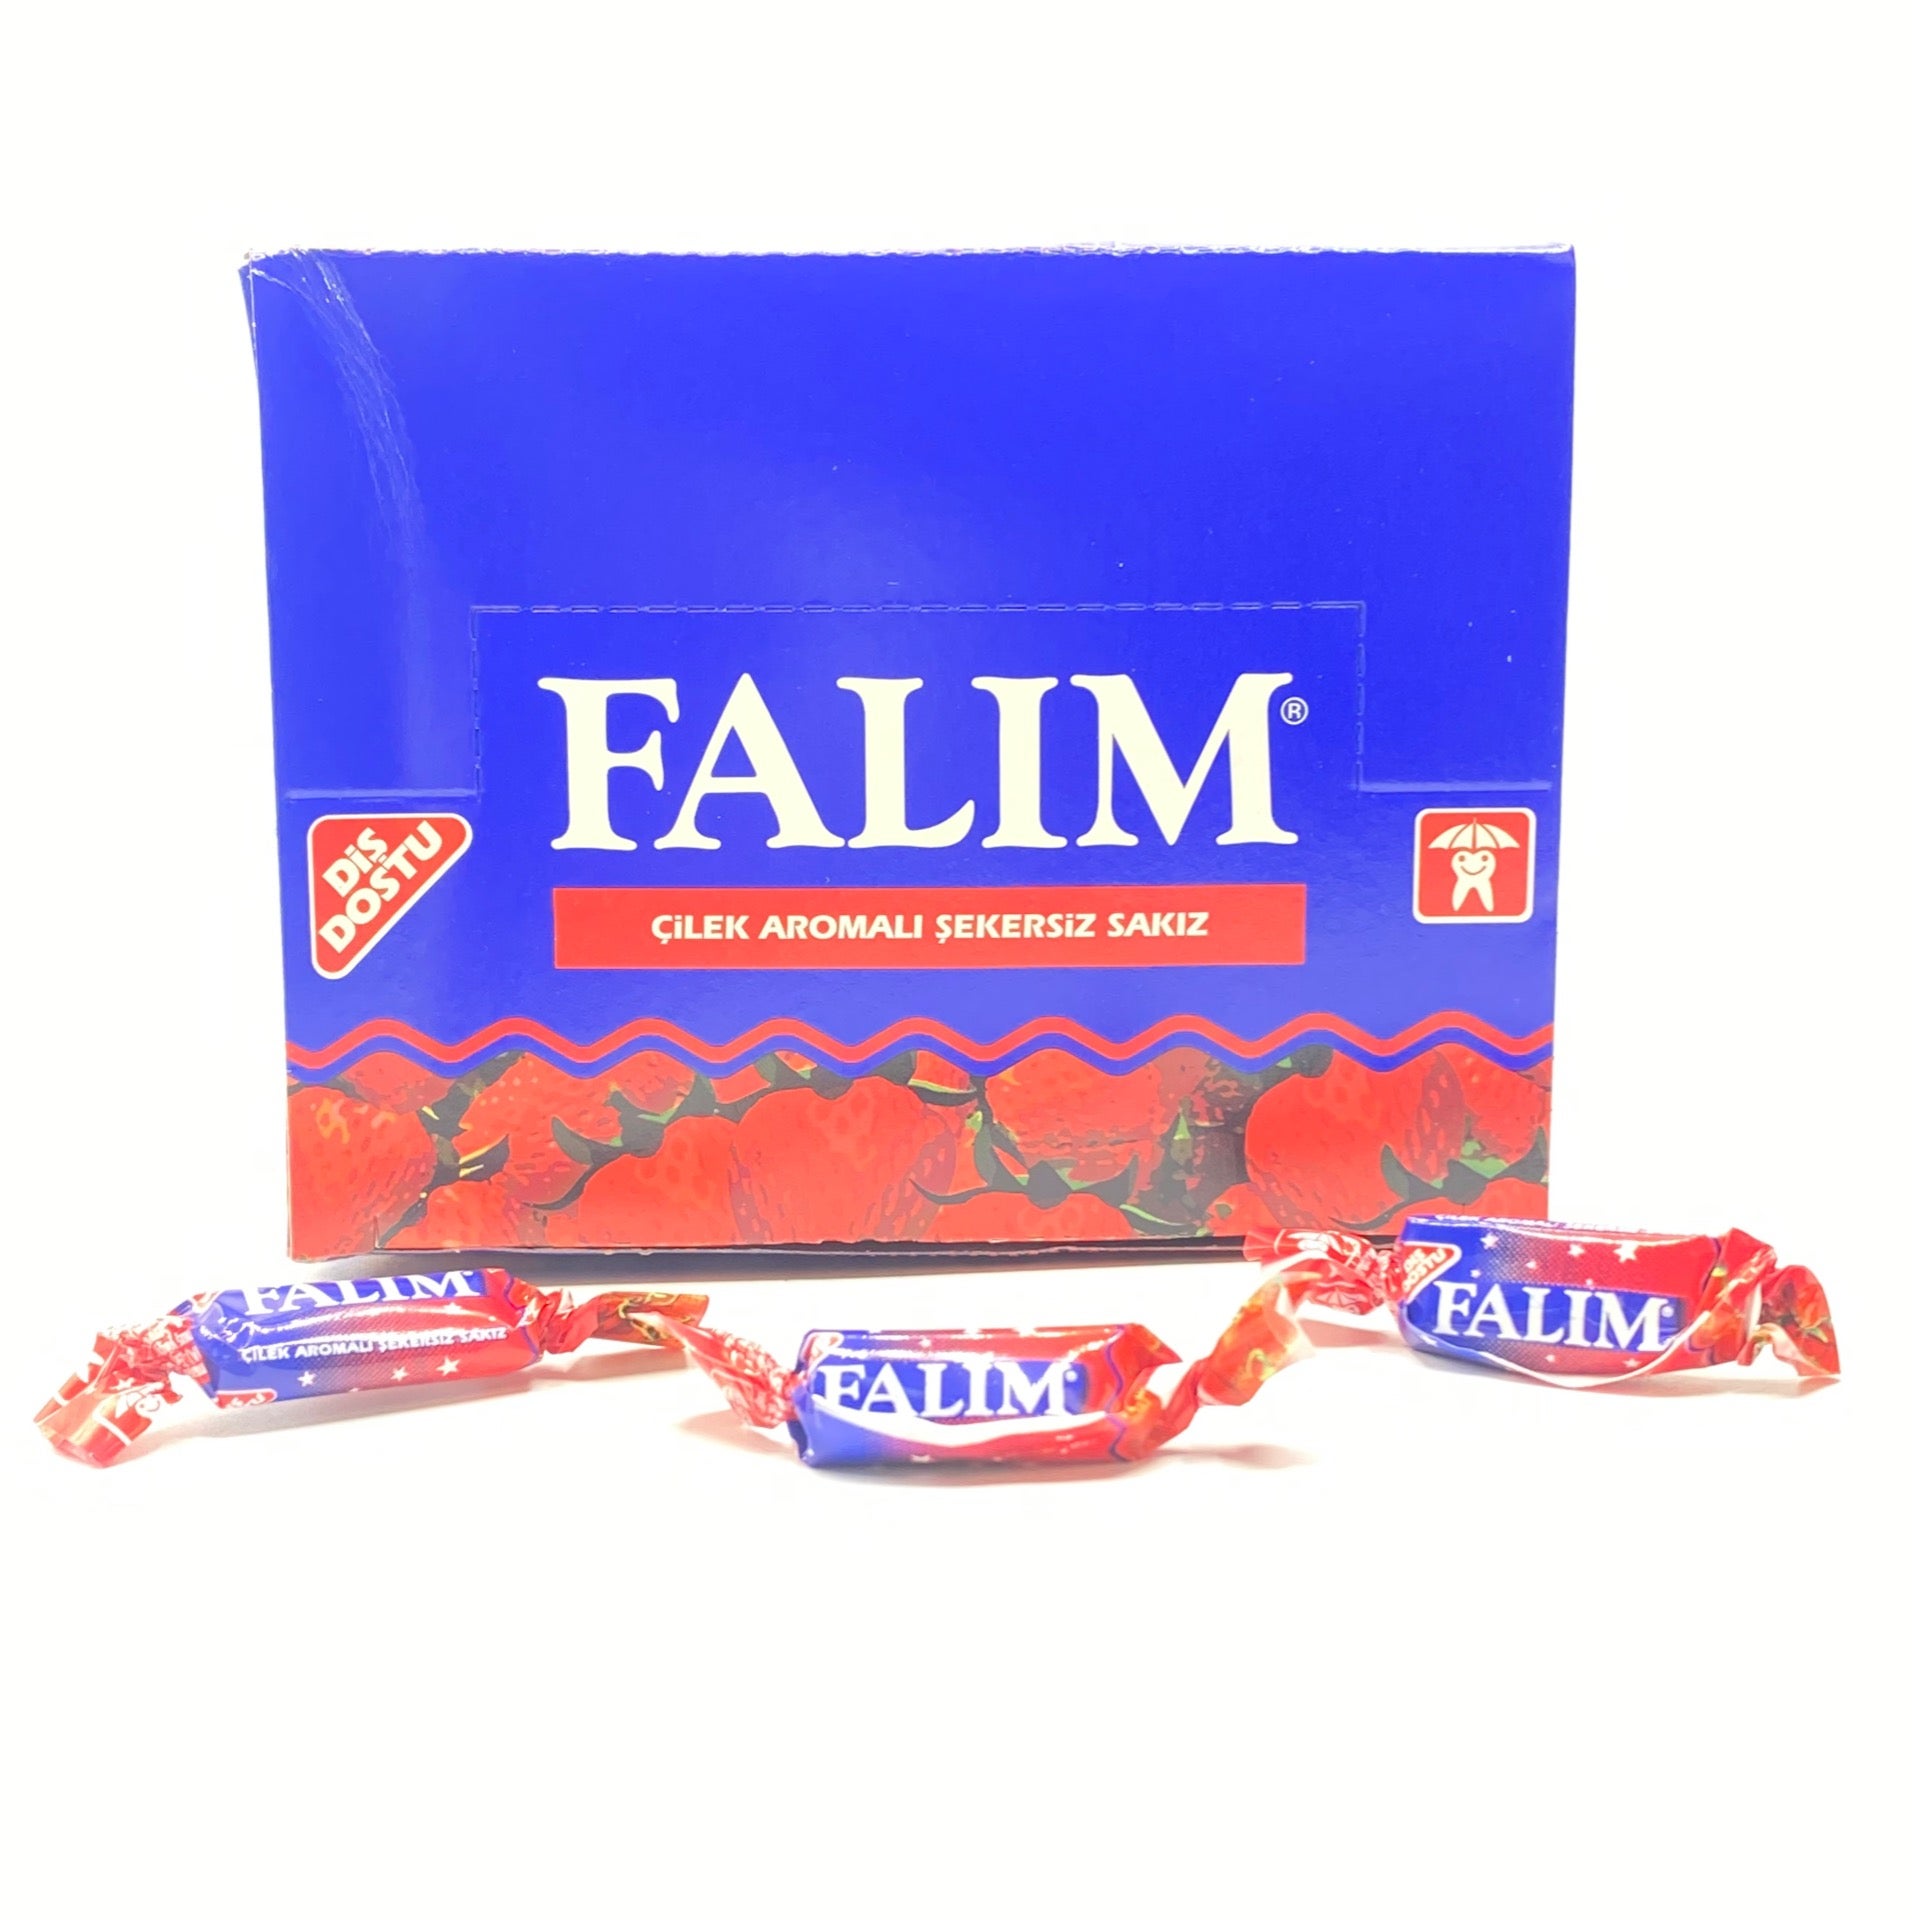 Dandy Falim Plain Gum 100pcs – Aslan Mediterranean Bazaar